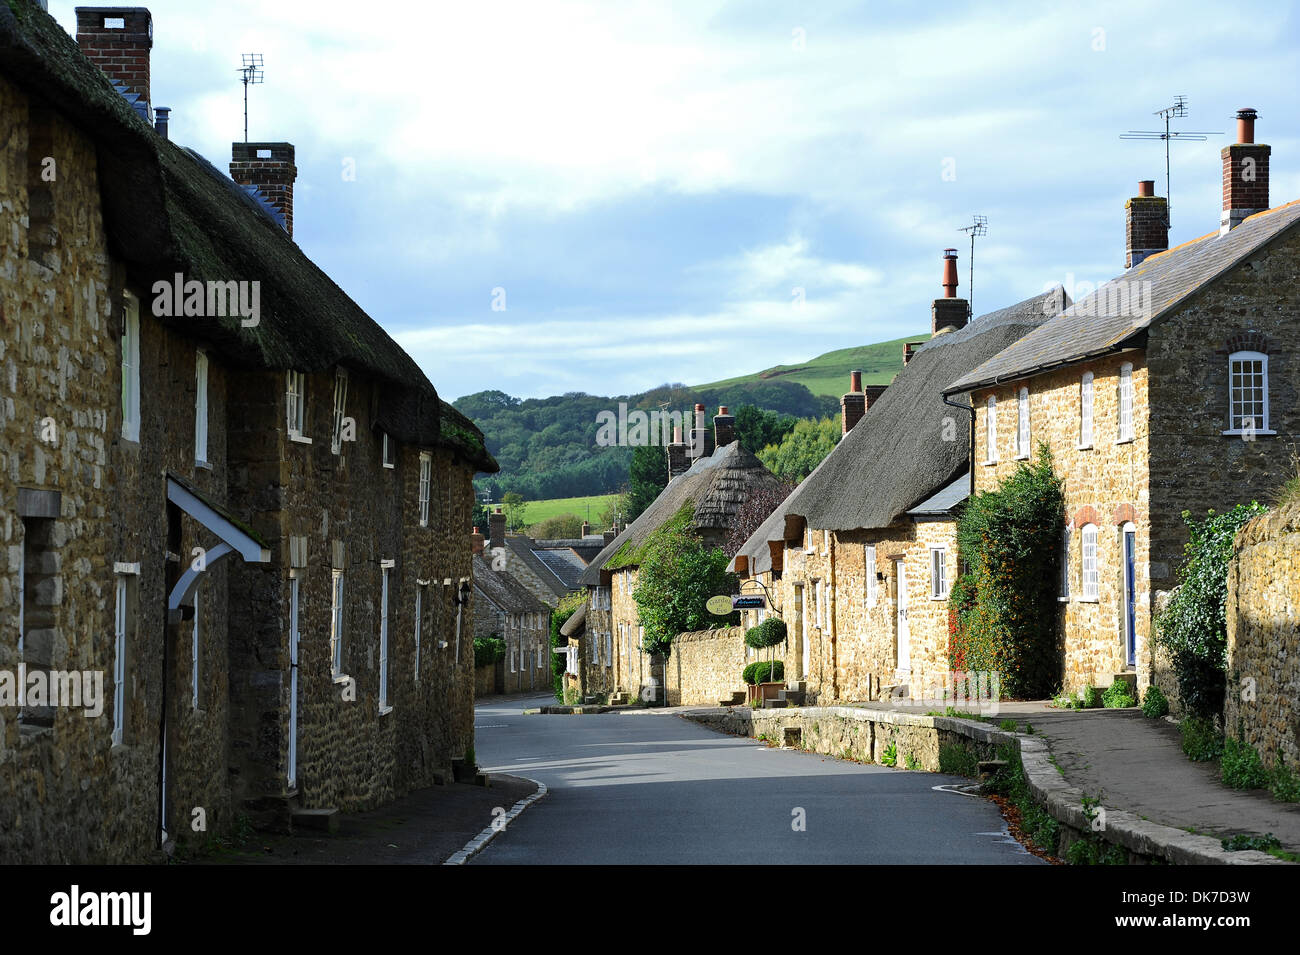 Abbotsbury Village, village d'Abbotsbury, Dorset, Angleterre, Royaume-Uni Banque D'Images